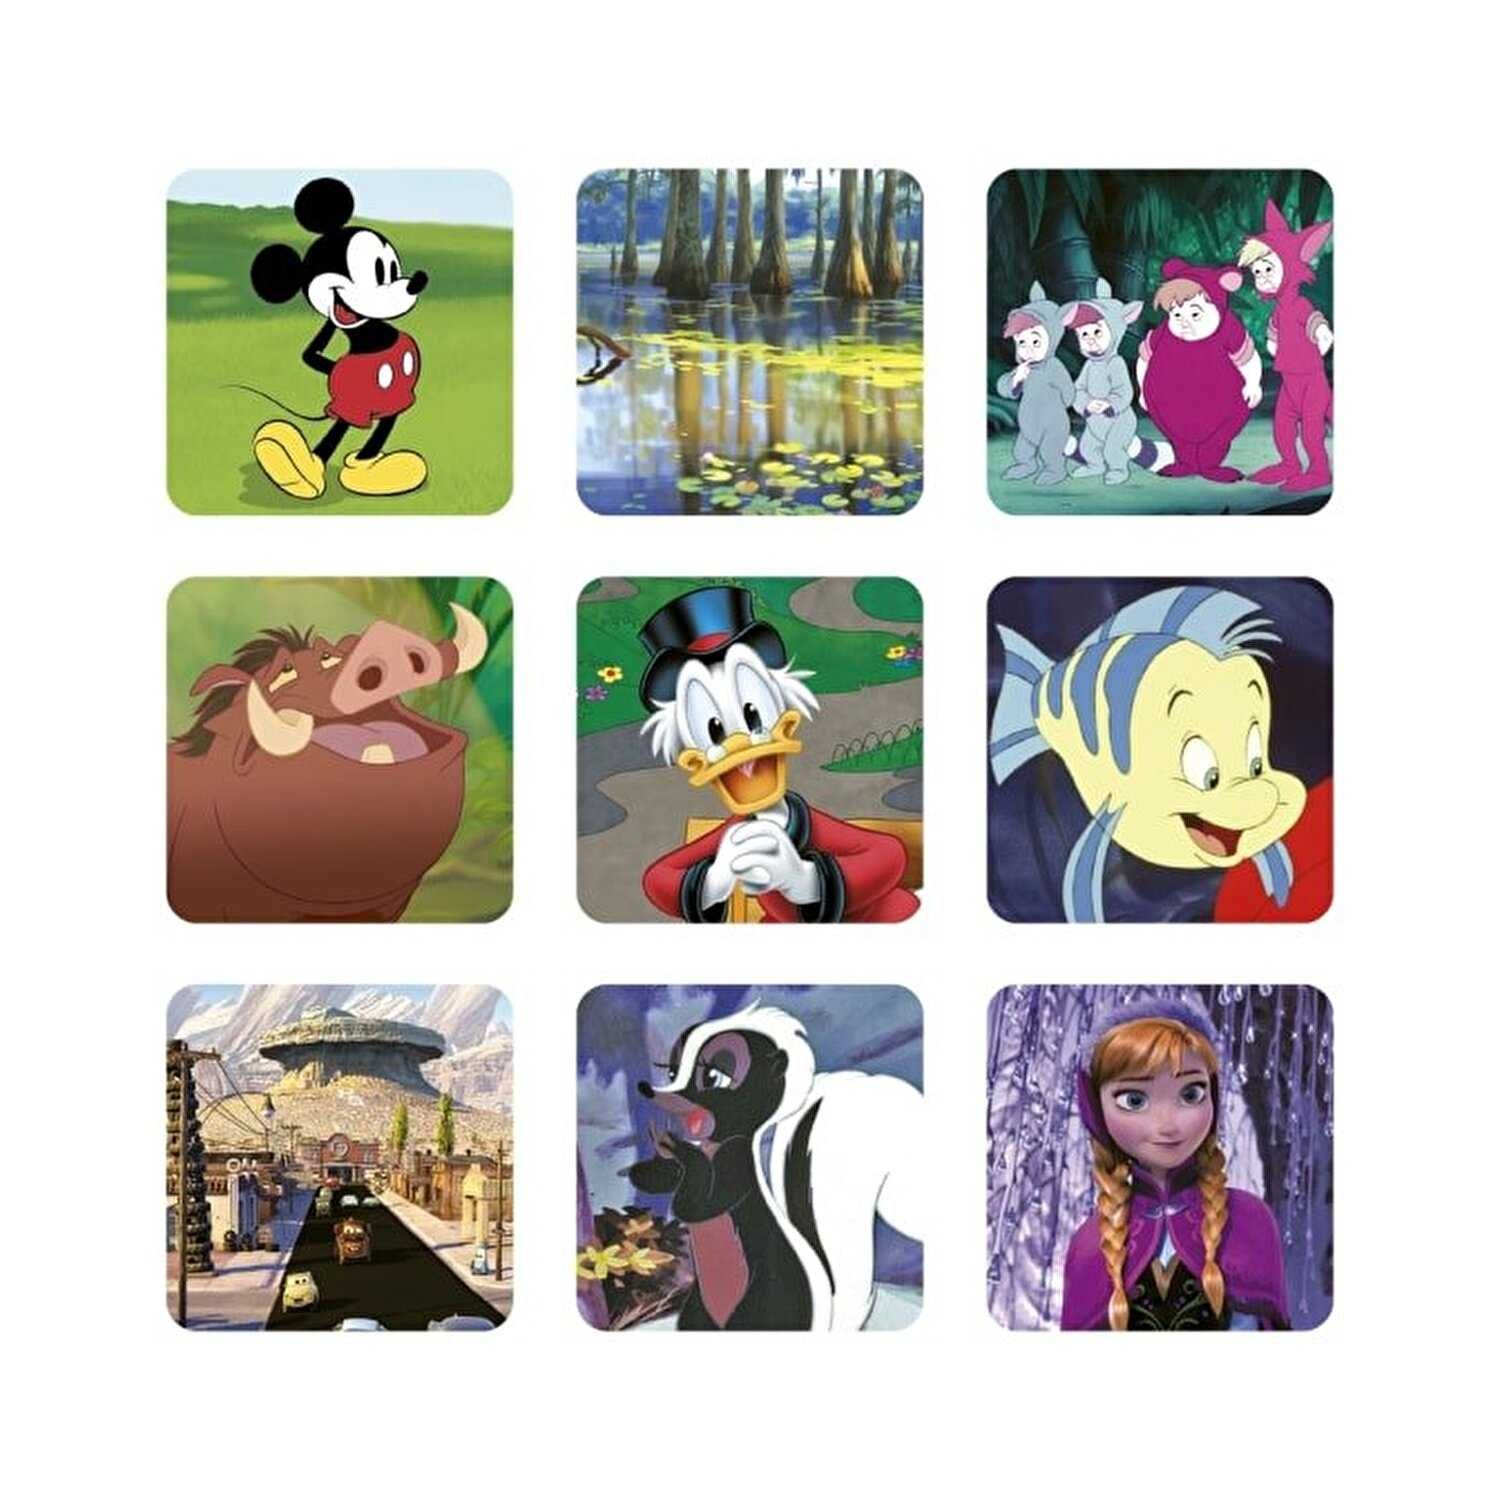 Codenames/Nume de cod Disney Editia de Familie joc de societate board